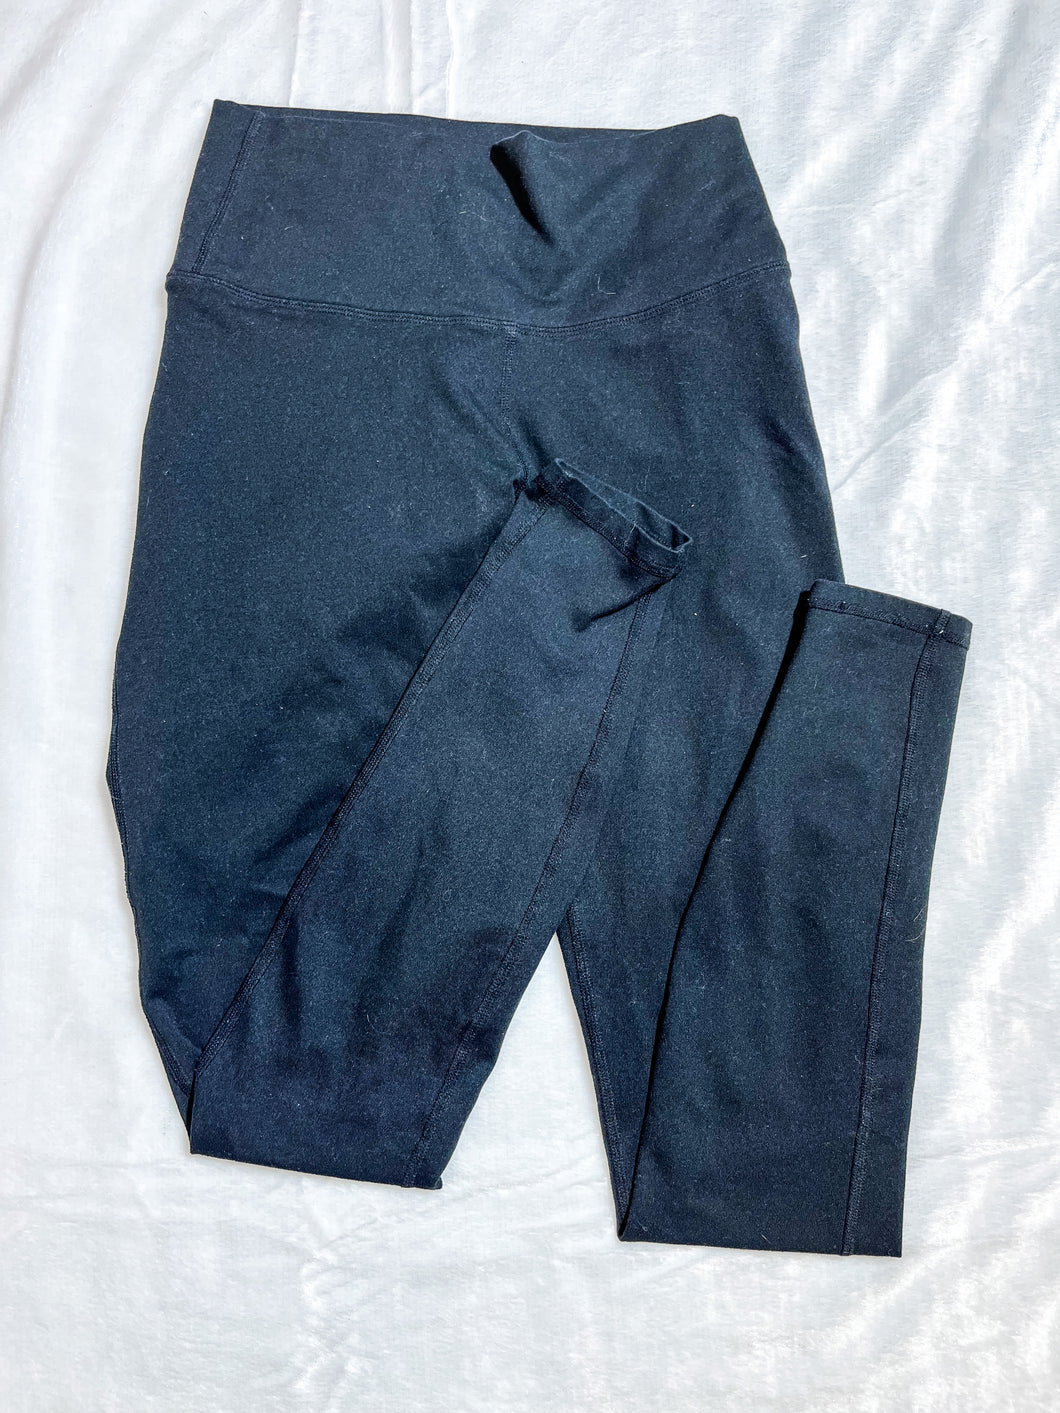 Fabletics Athletic Pants Extra Extra Small B094 - Plato's Closet Bridgeville, PA